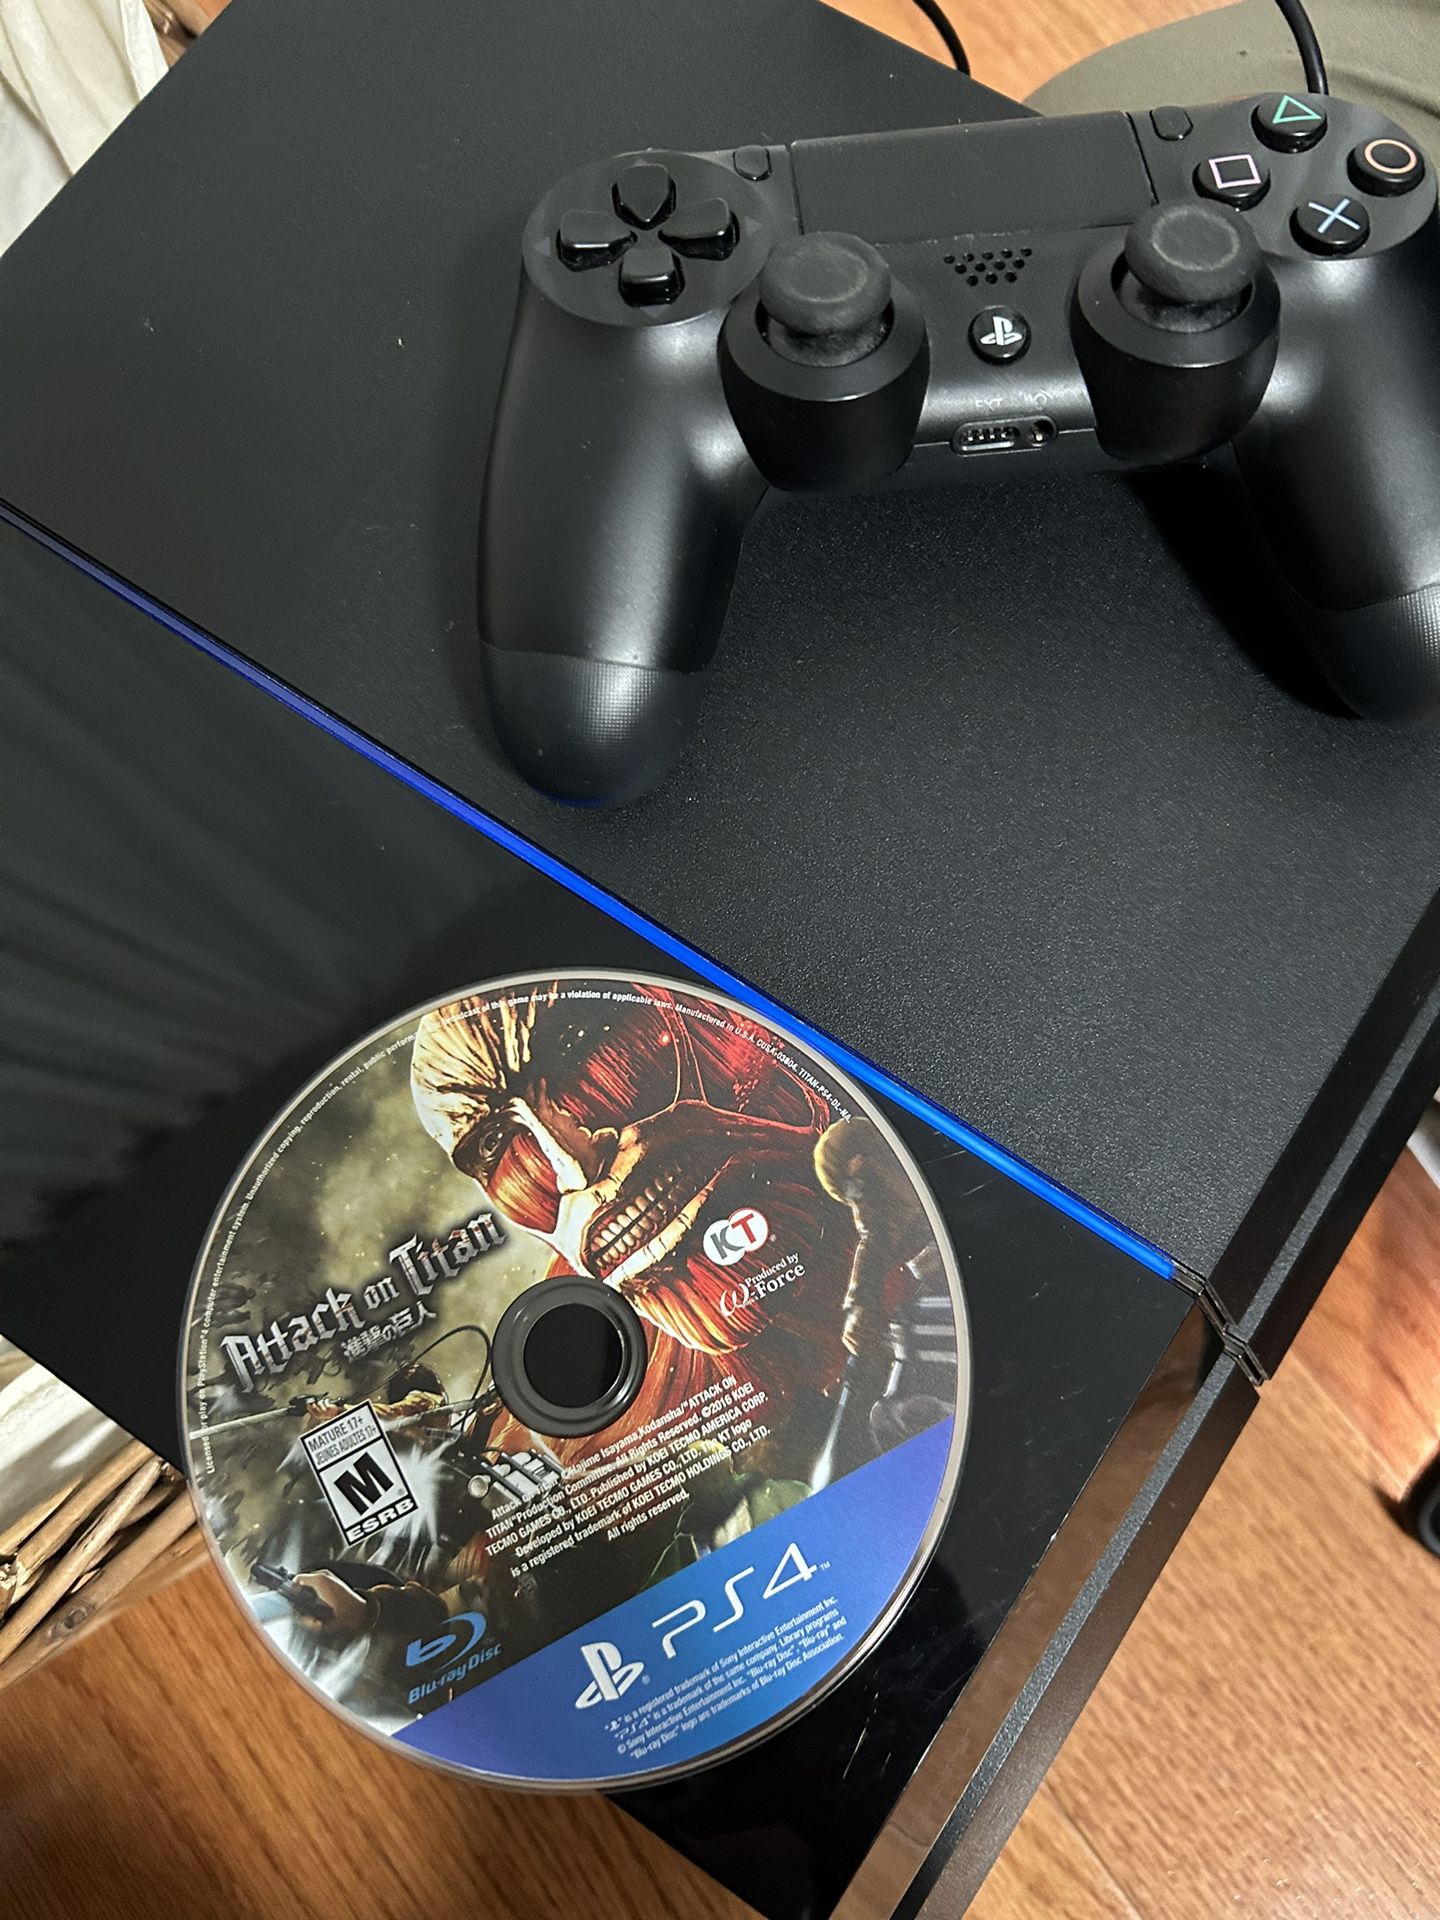 Attack on Titan - PlayStation 4